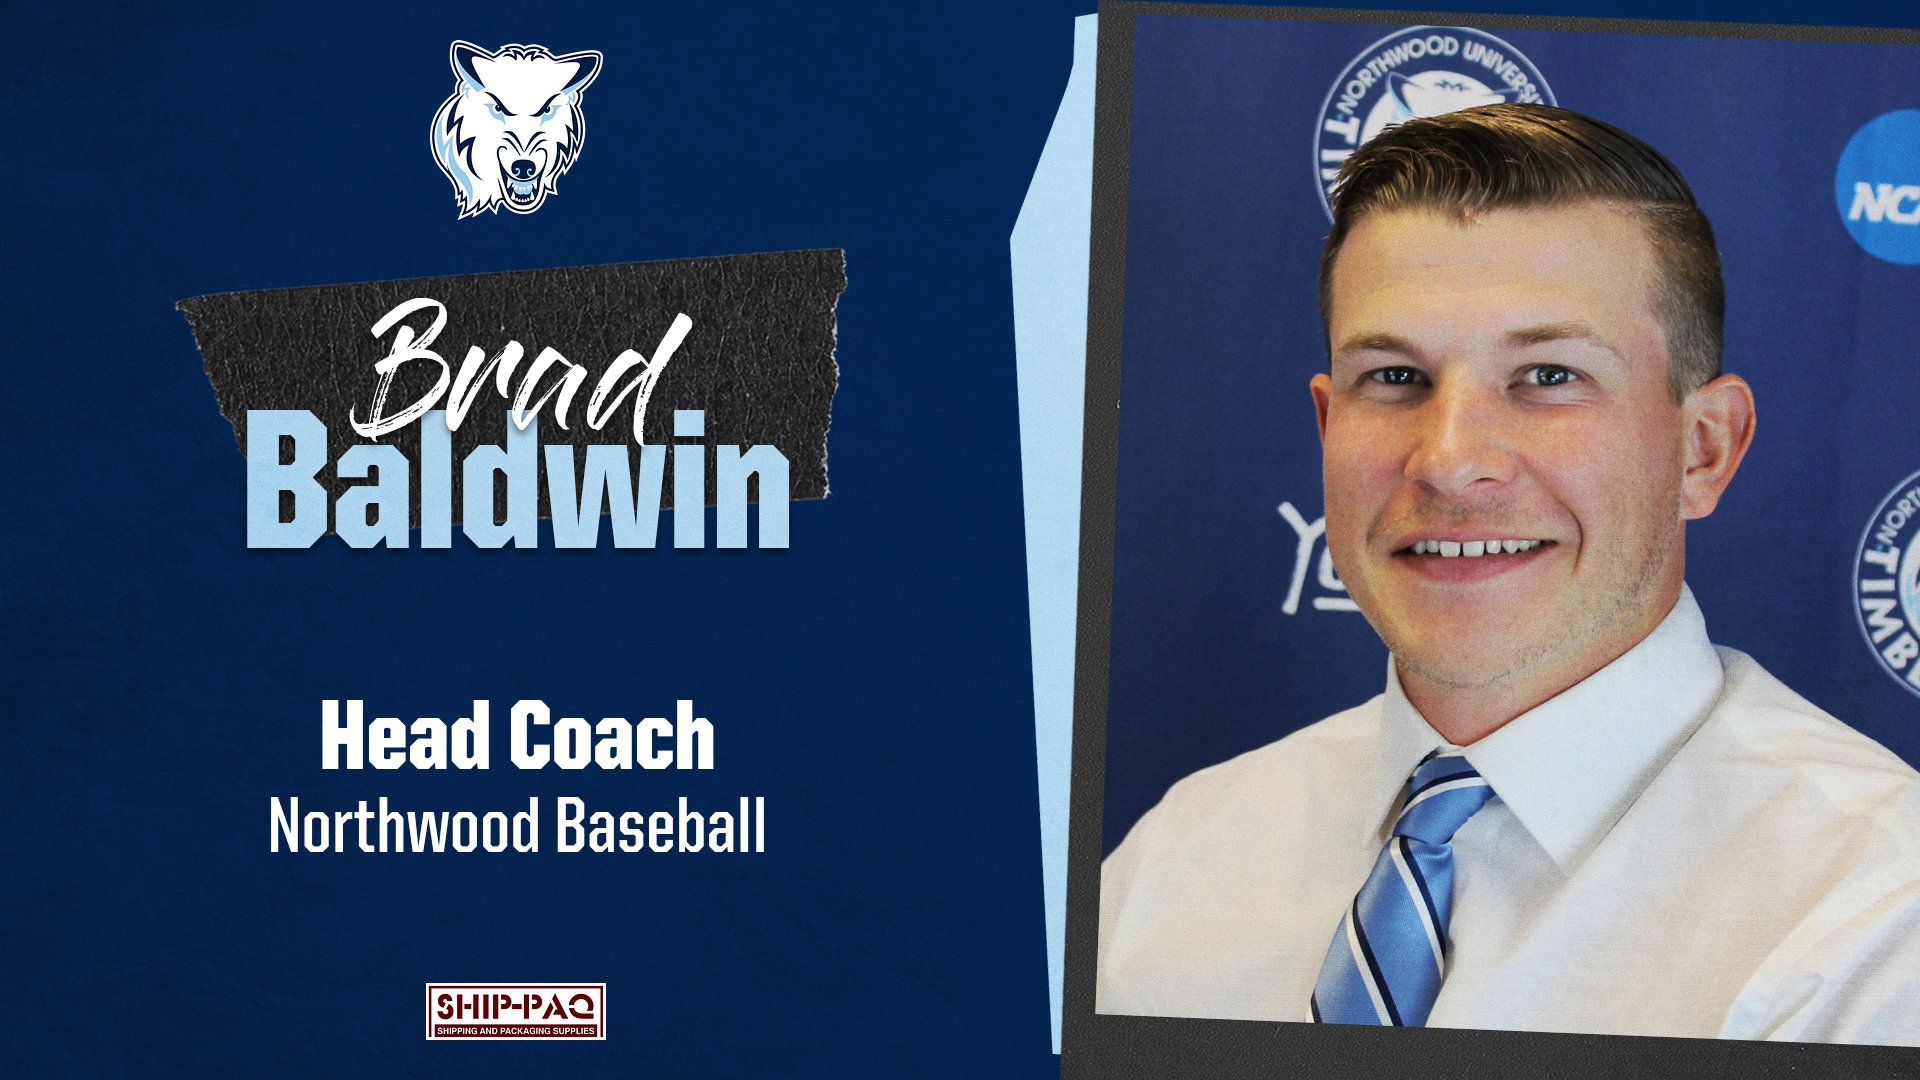 Brad Baldwin Named Ninth Head Coach In Northwood Baseball History